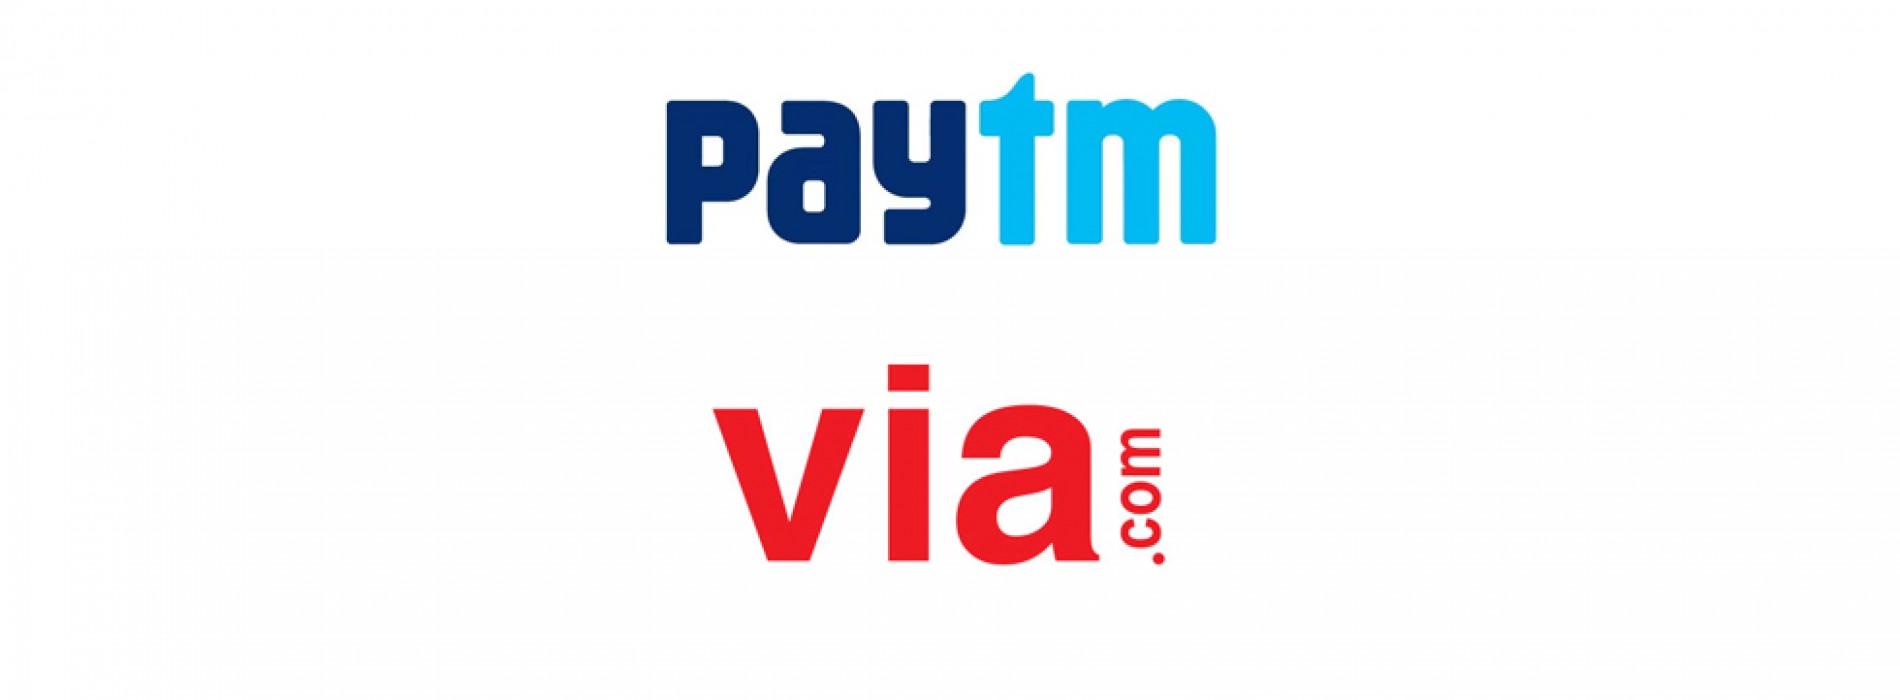 Paytm in talks to buy online travel portal Via.com